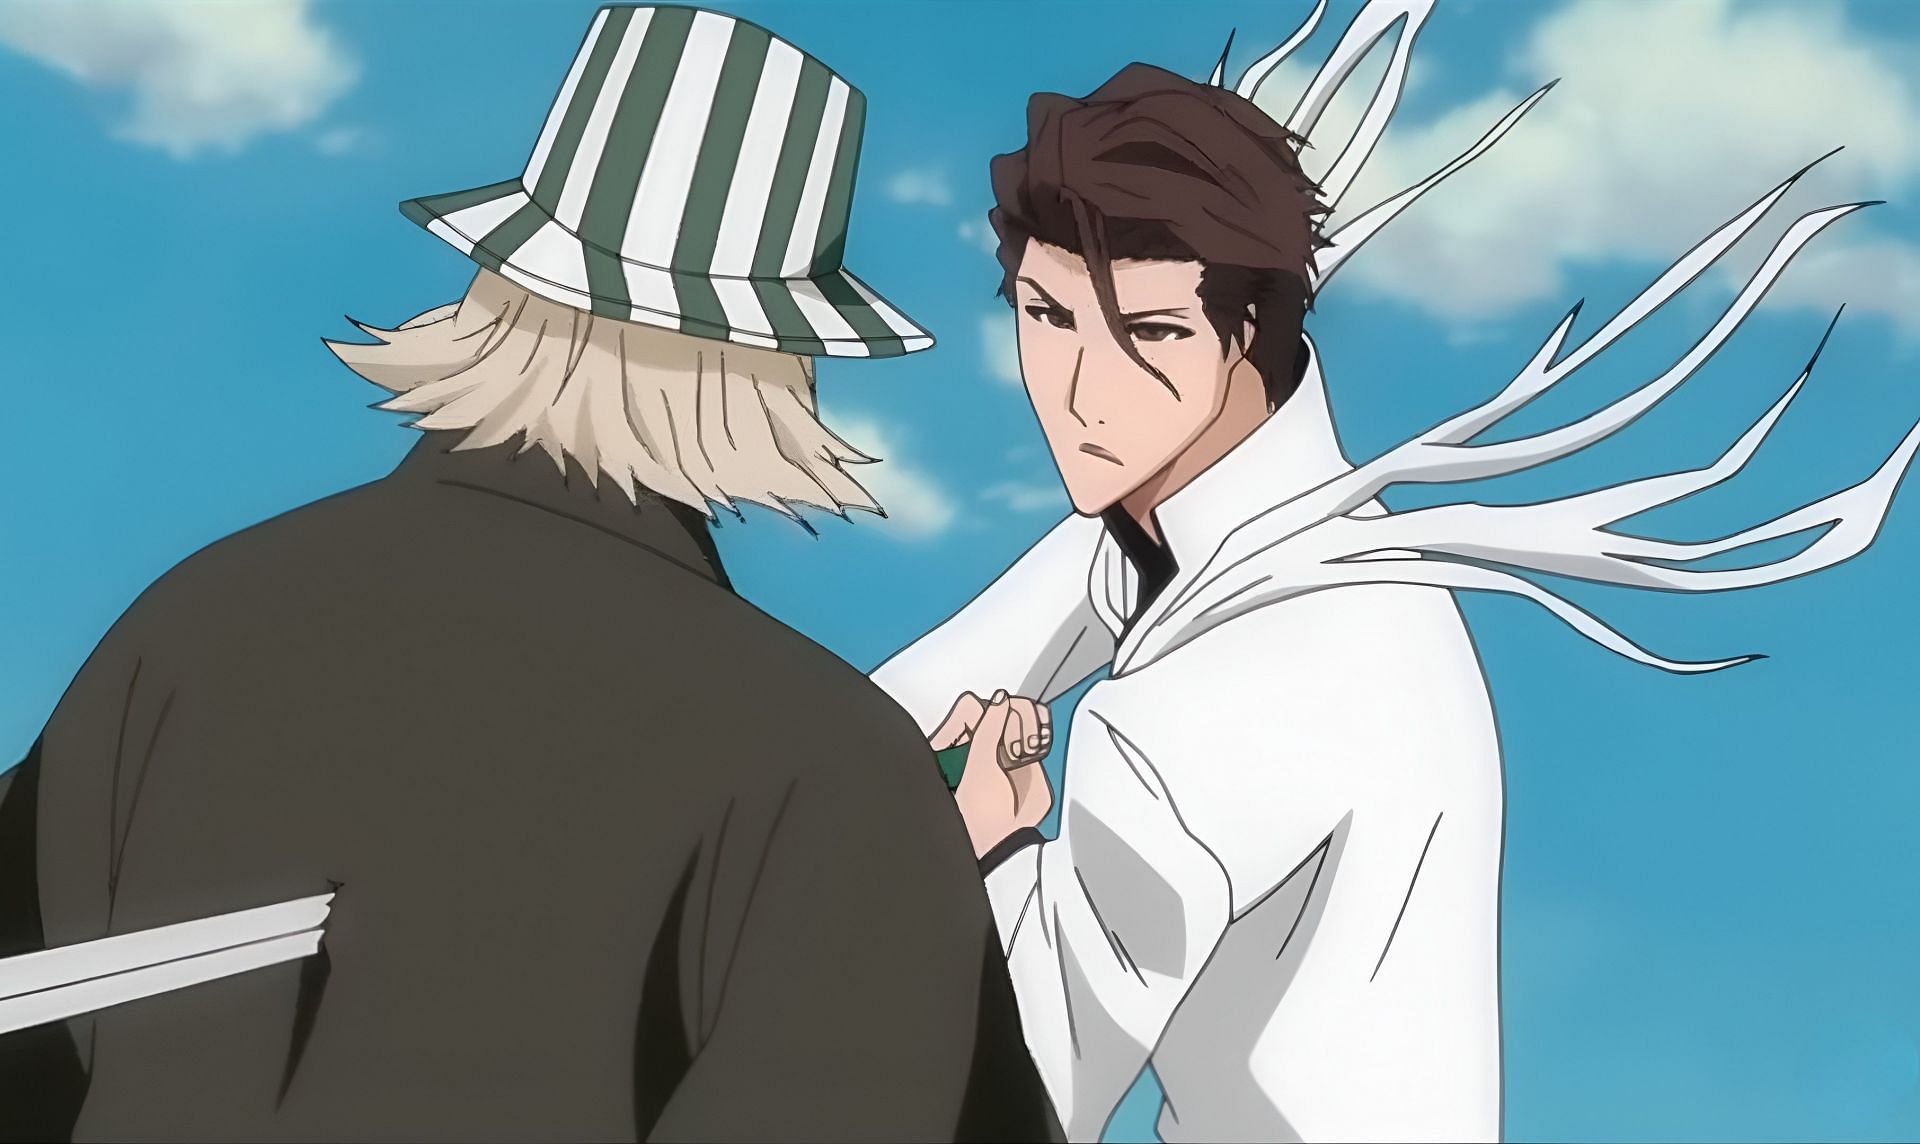 Urahara and Aizen as seen in the Bleach anime (Image via Studio Pierrot)